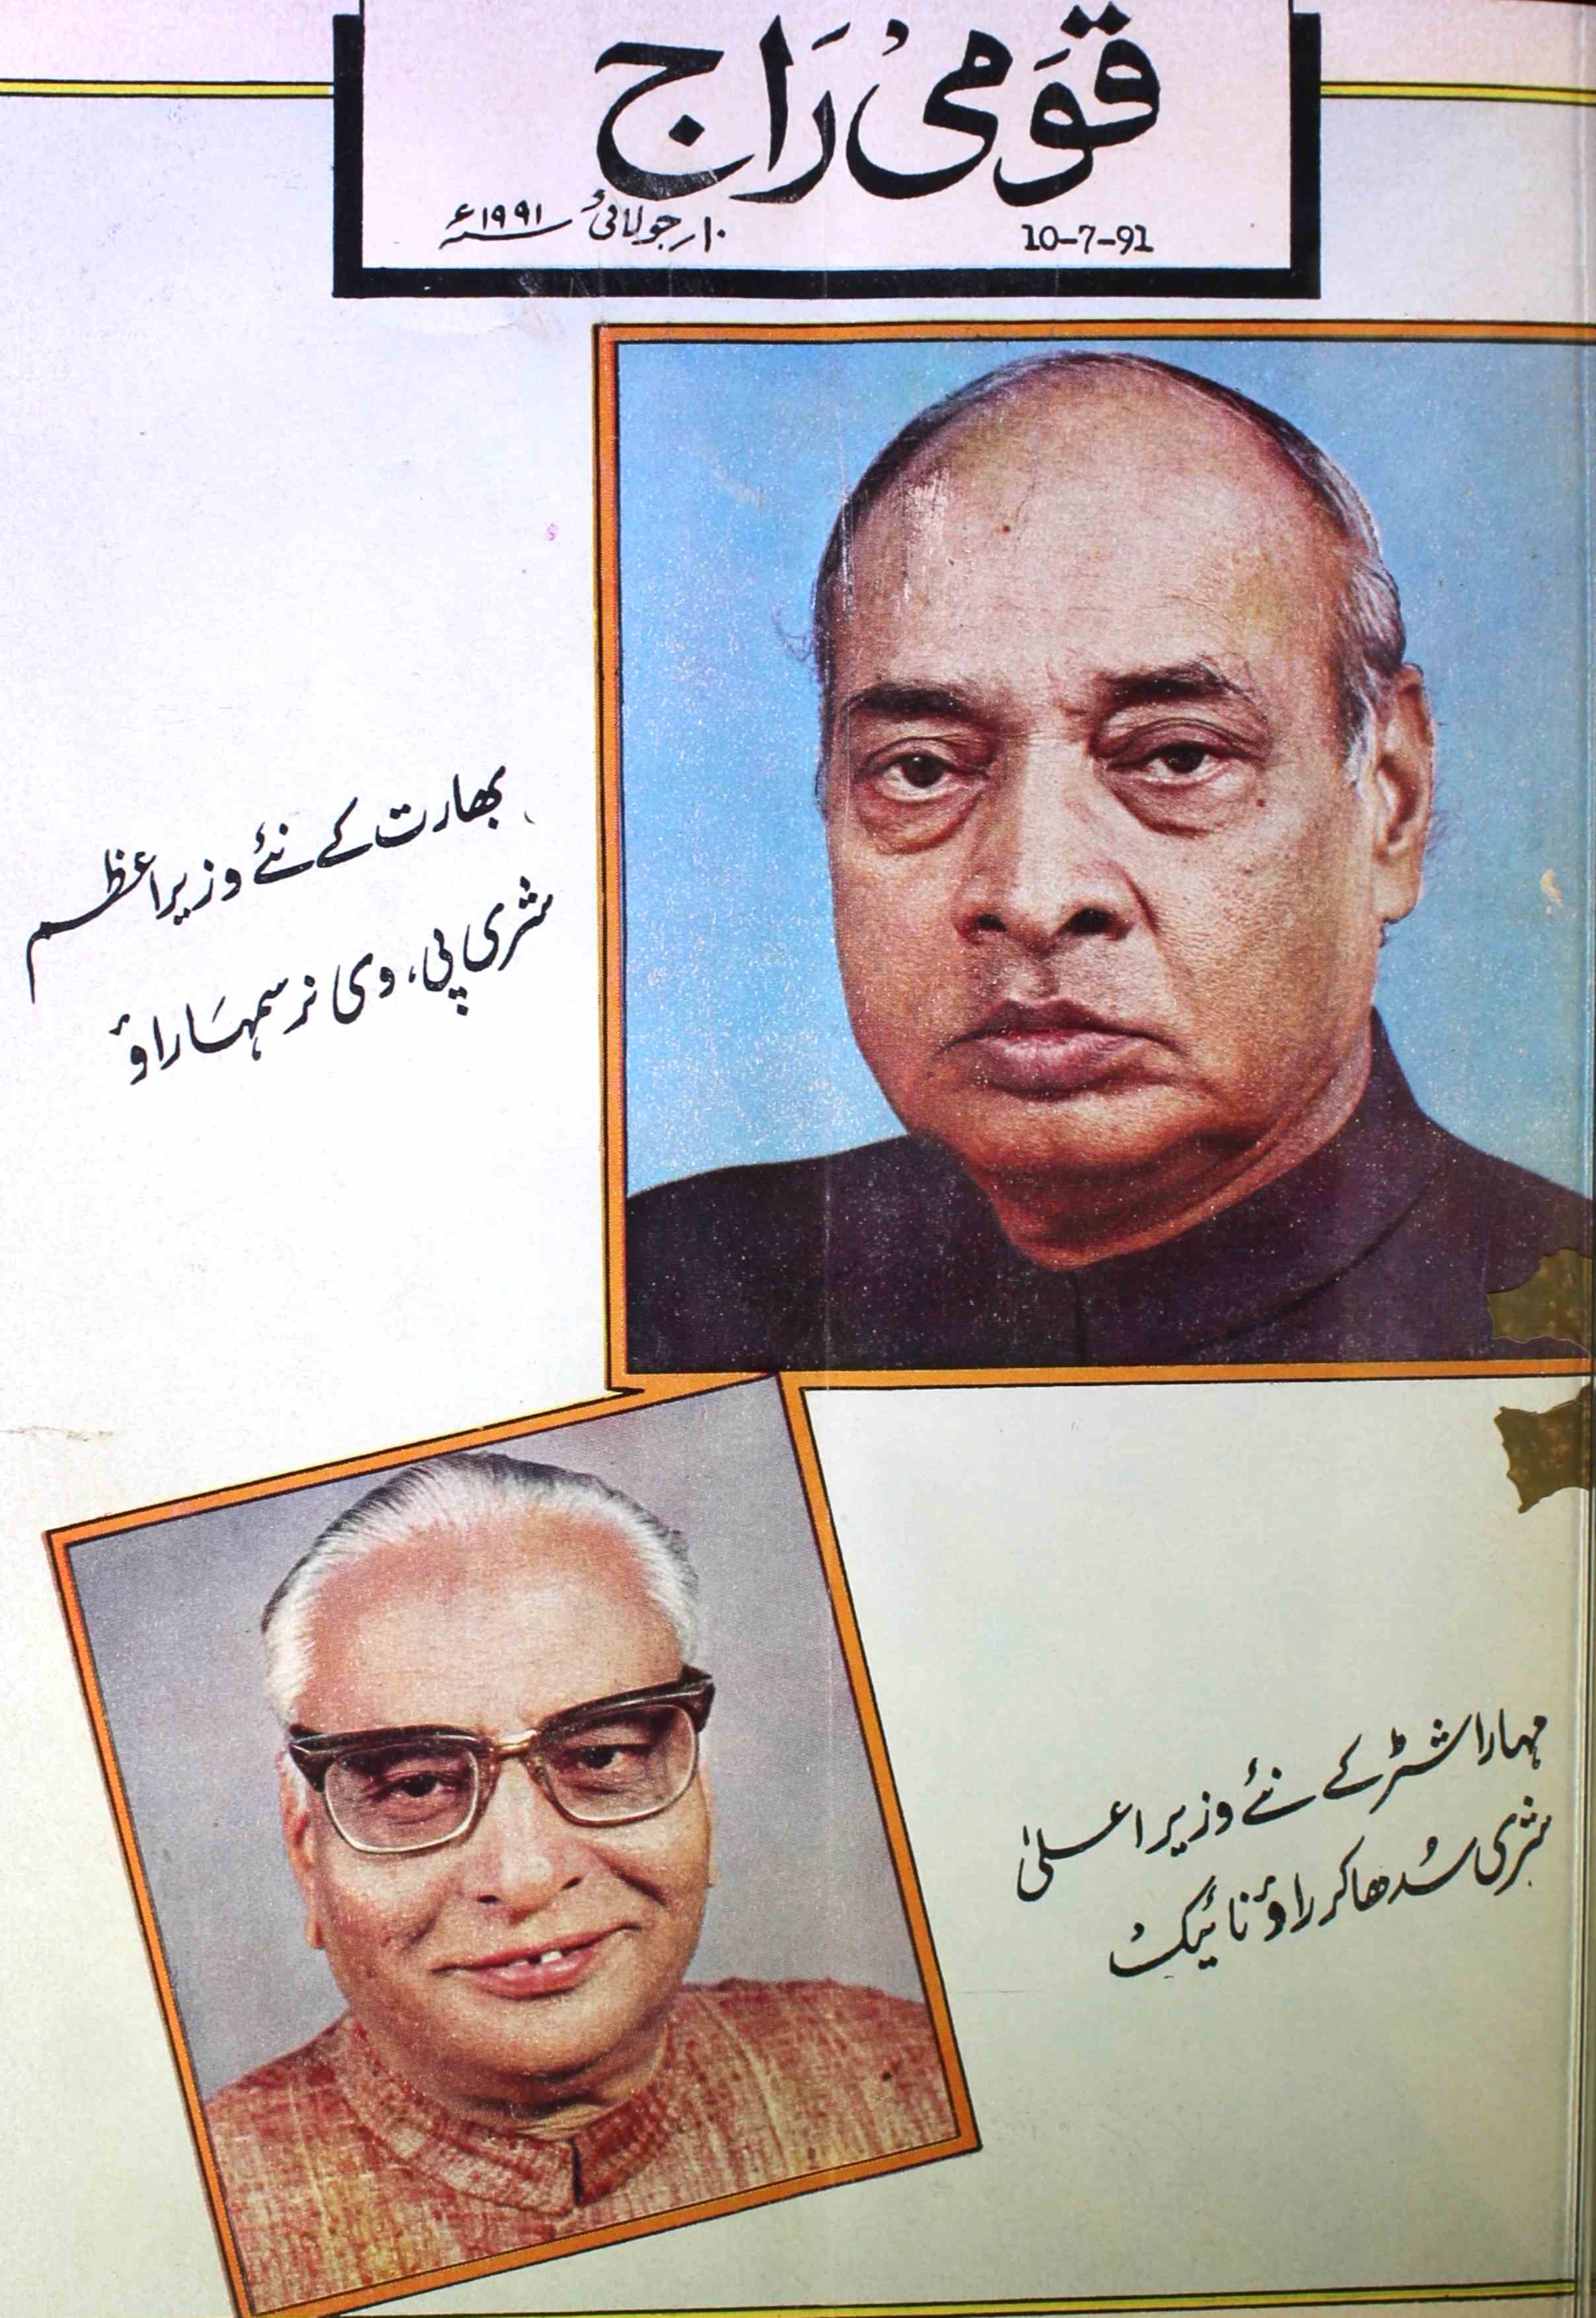 Qaumi Raj Jild-18 Shumara.7 July 1991 - Hyd-Shumara Number-007